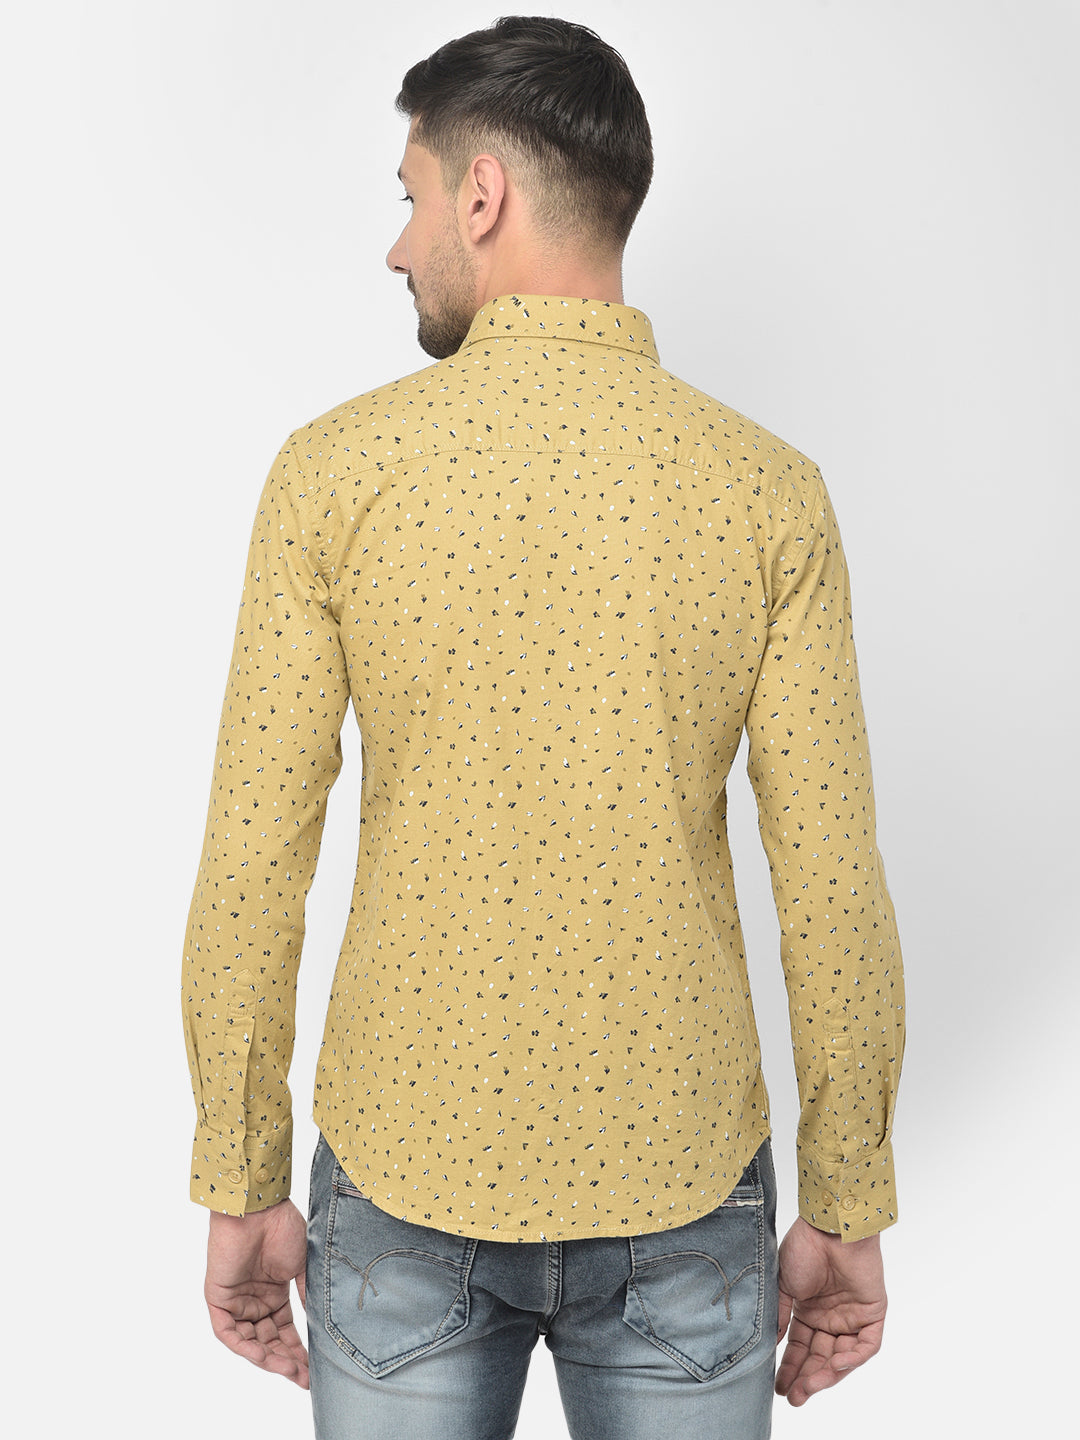 Beige Printed Spread Collar Shirt - Men Shirts